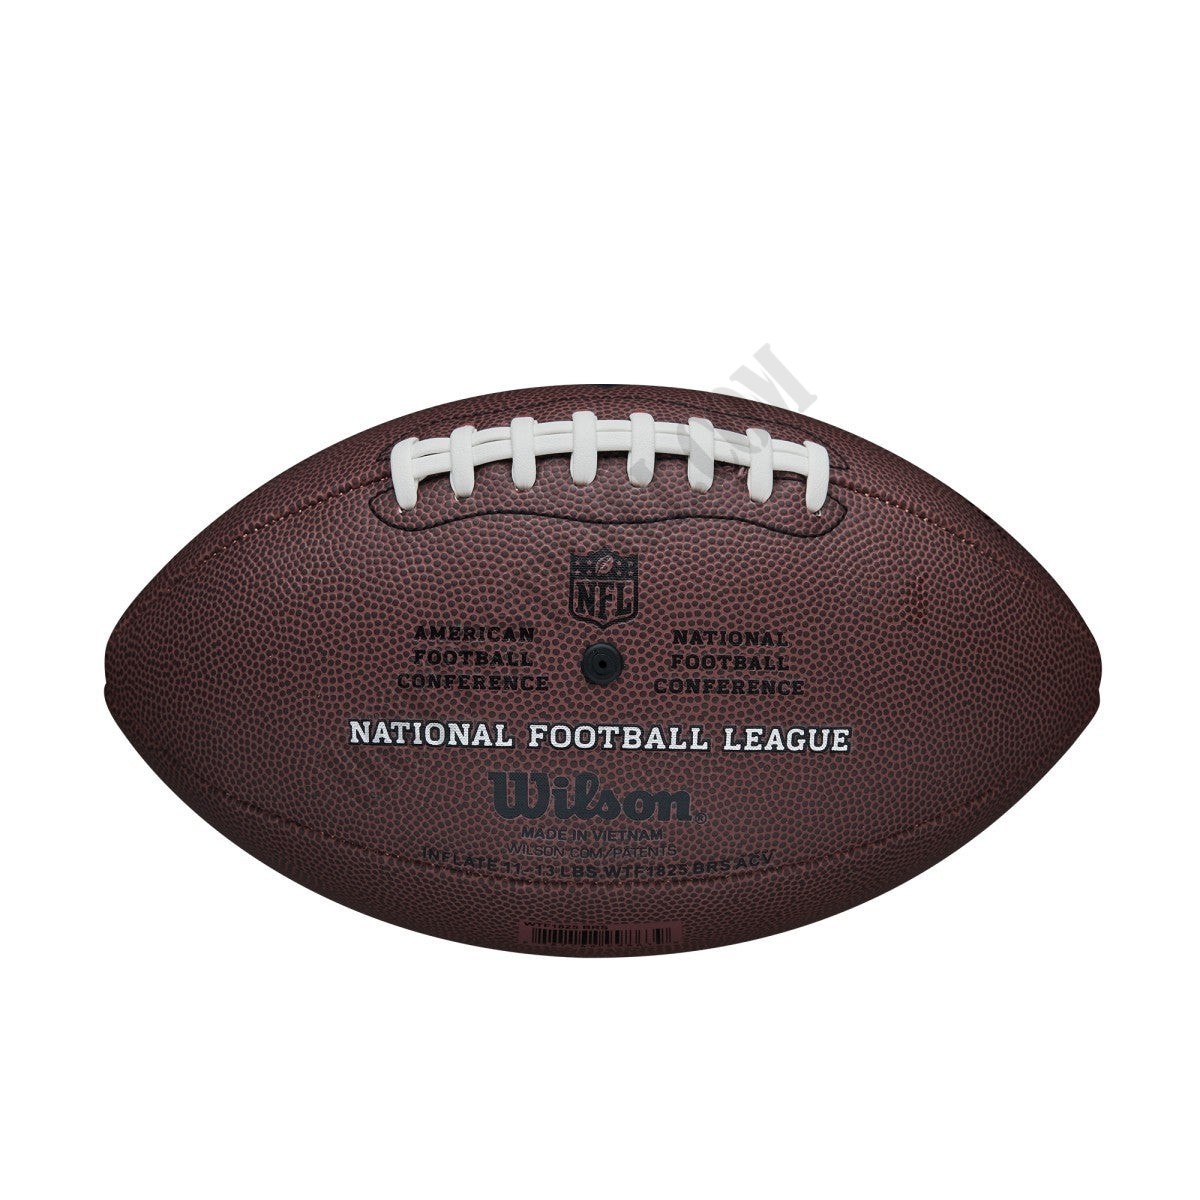 NFL The Duke Replica Football - Wilson Discount Store - -1